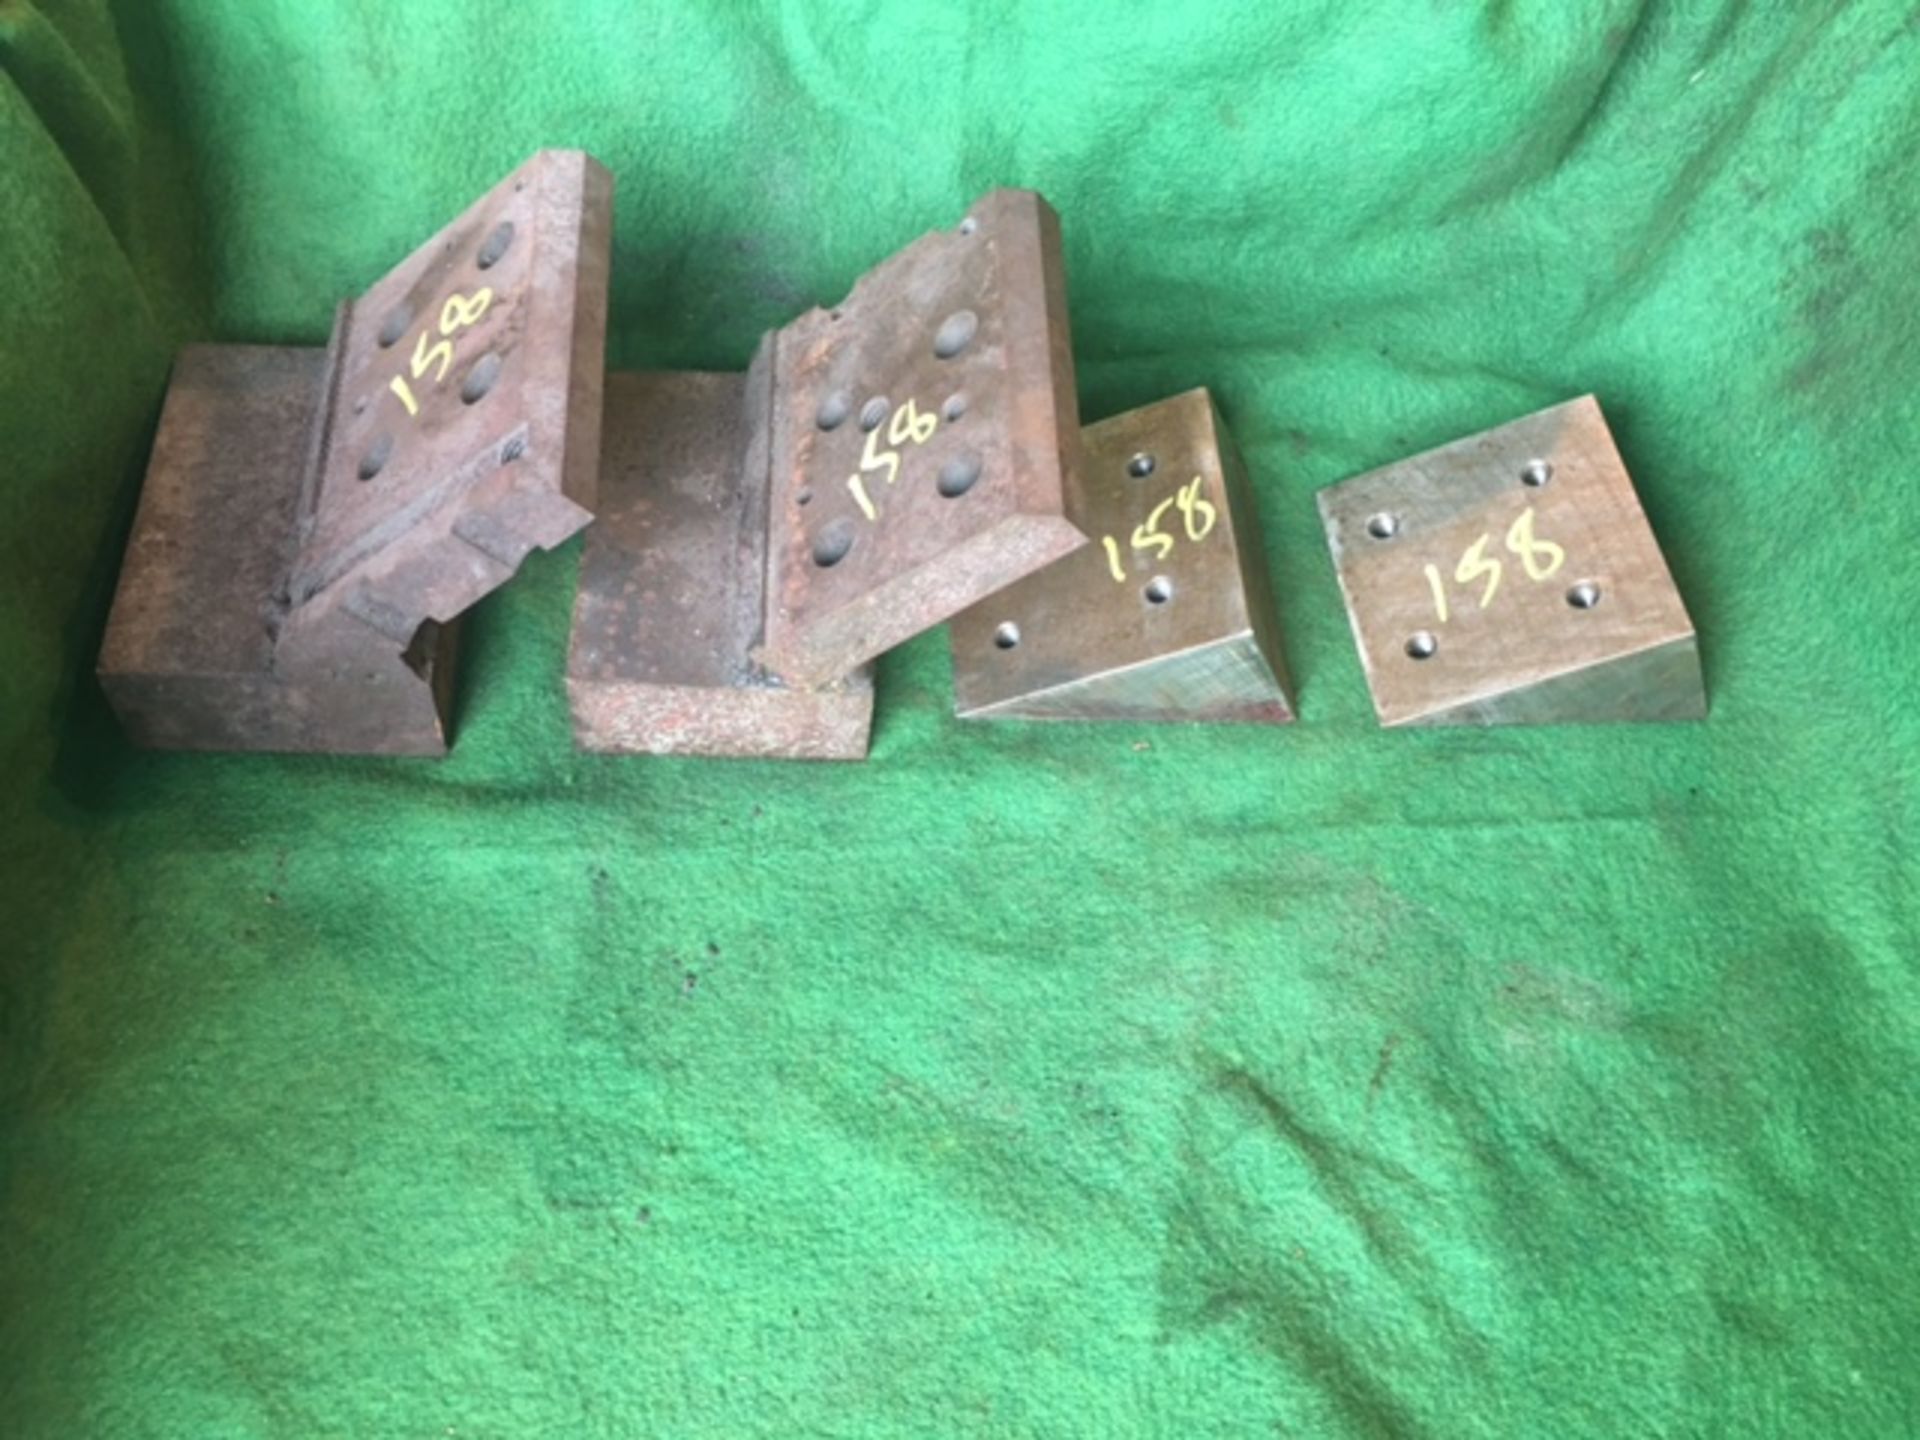 (2) 45 deg angle plates and (2) 30 deg wedge blocks.